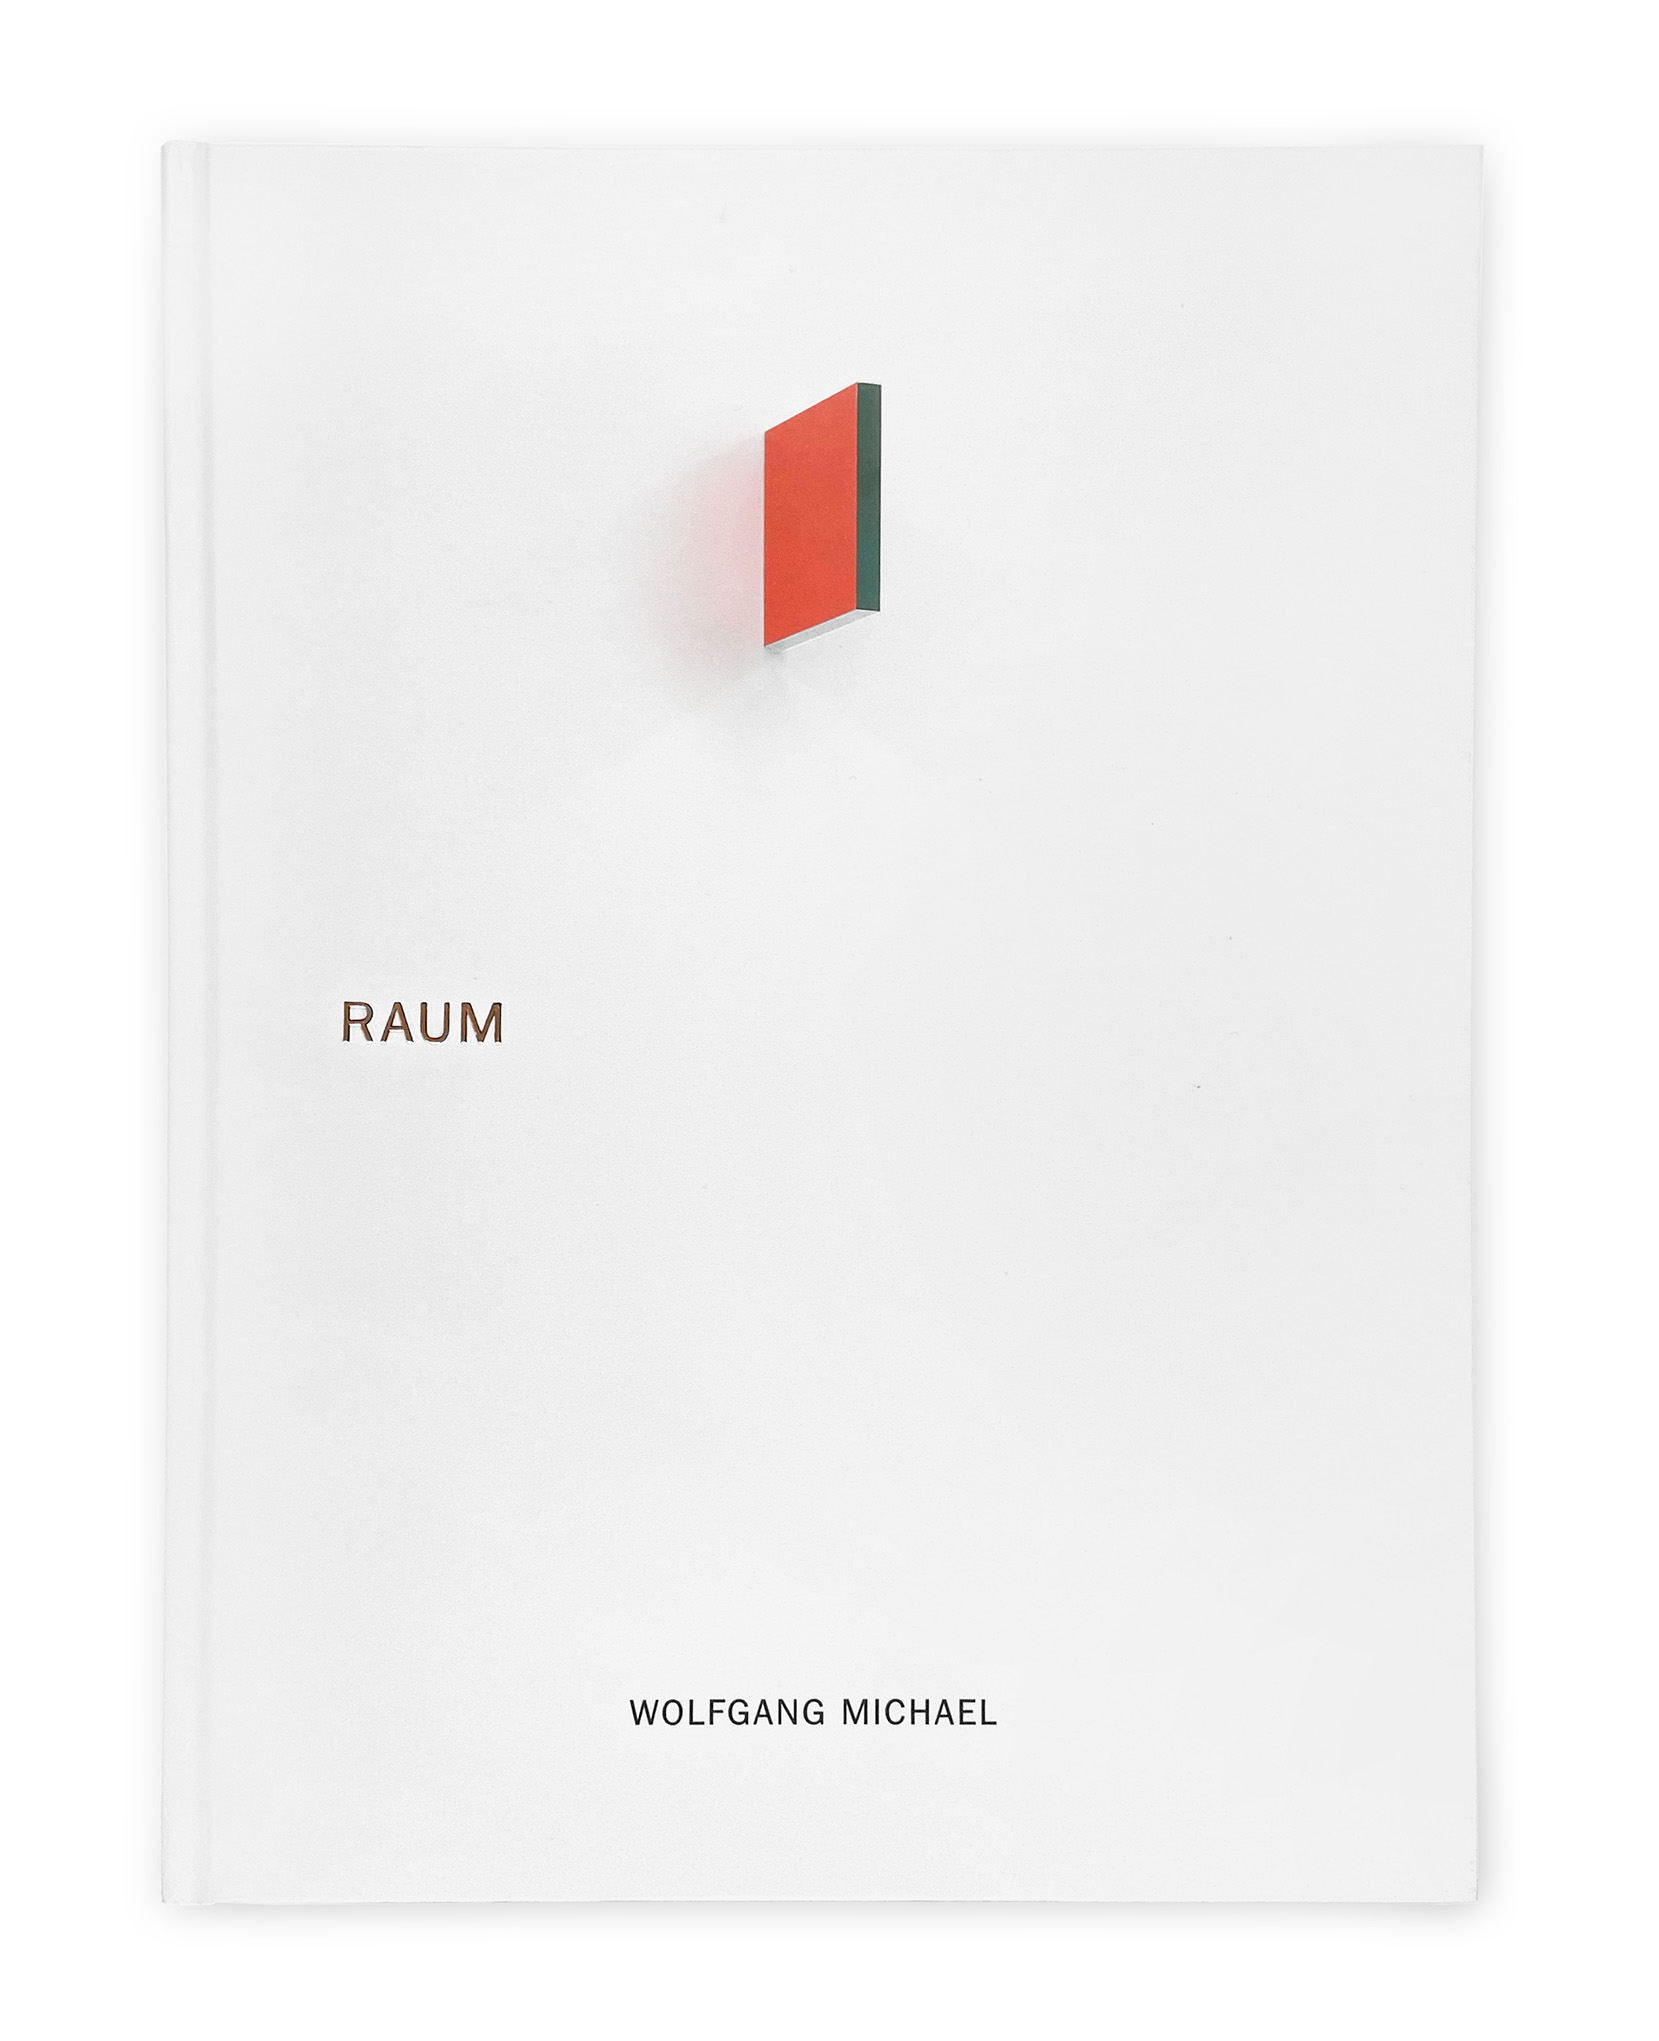 Wolfgang Michael | RAUM